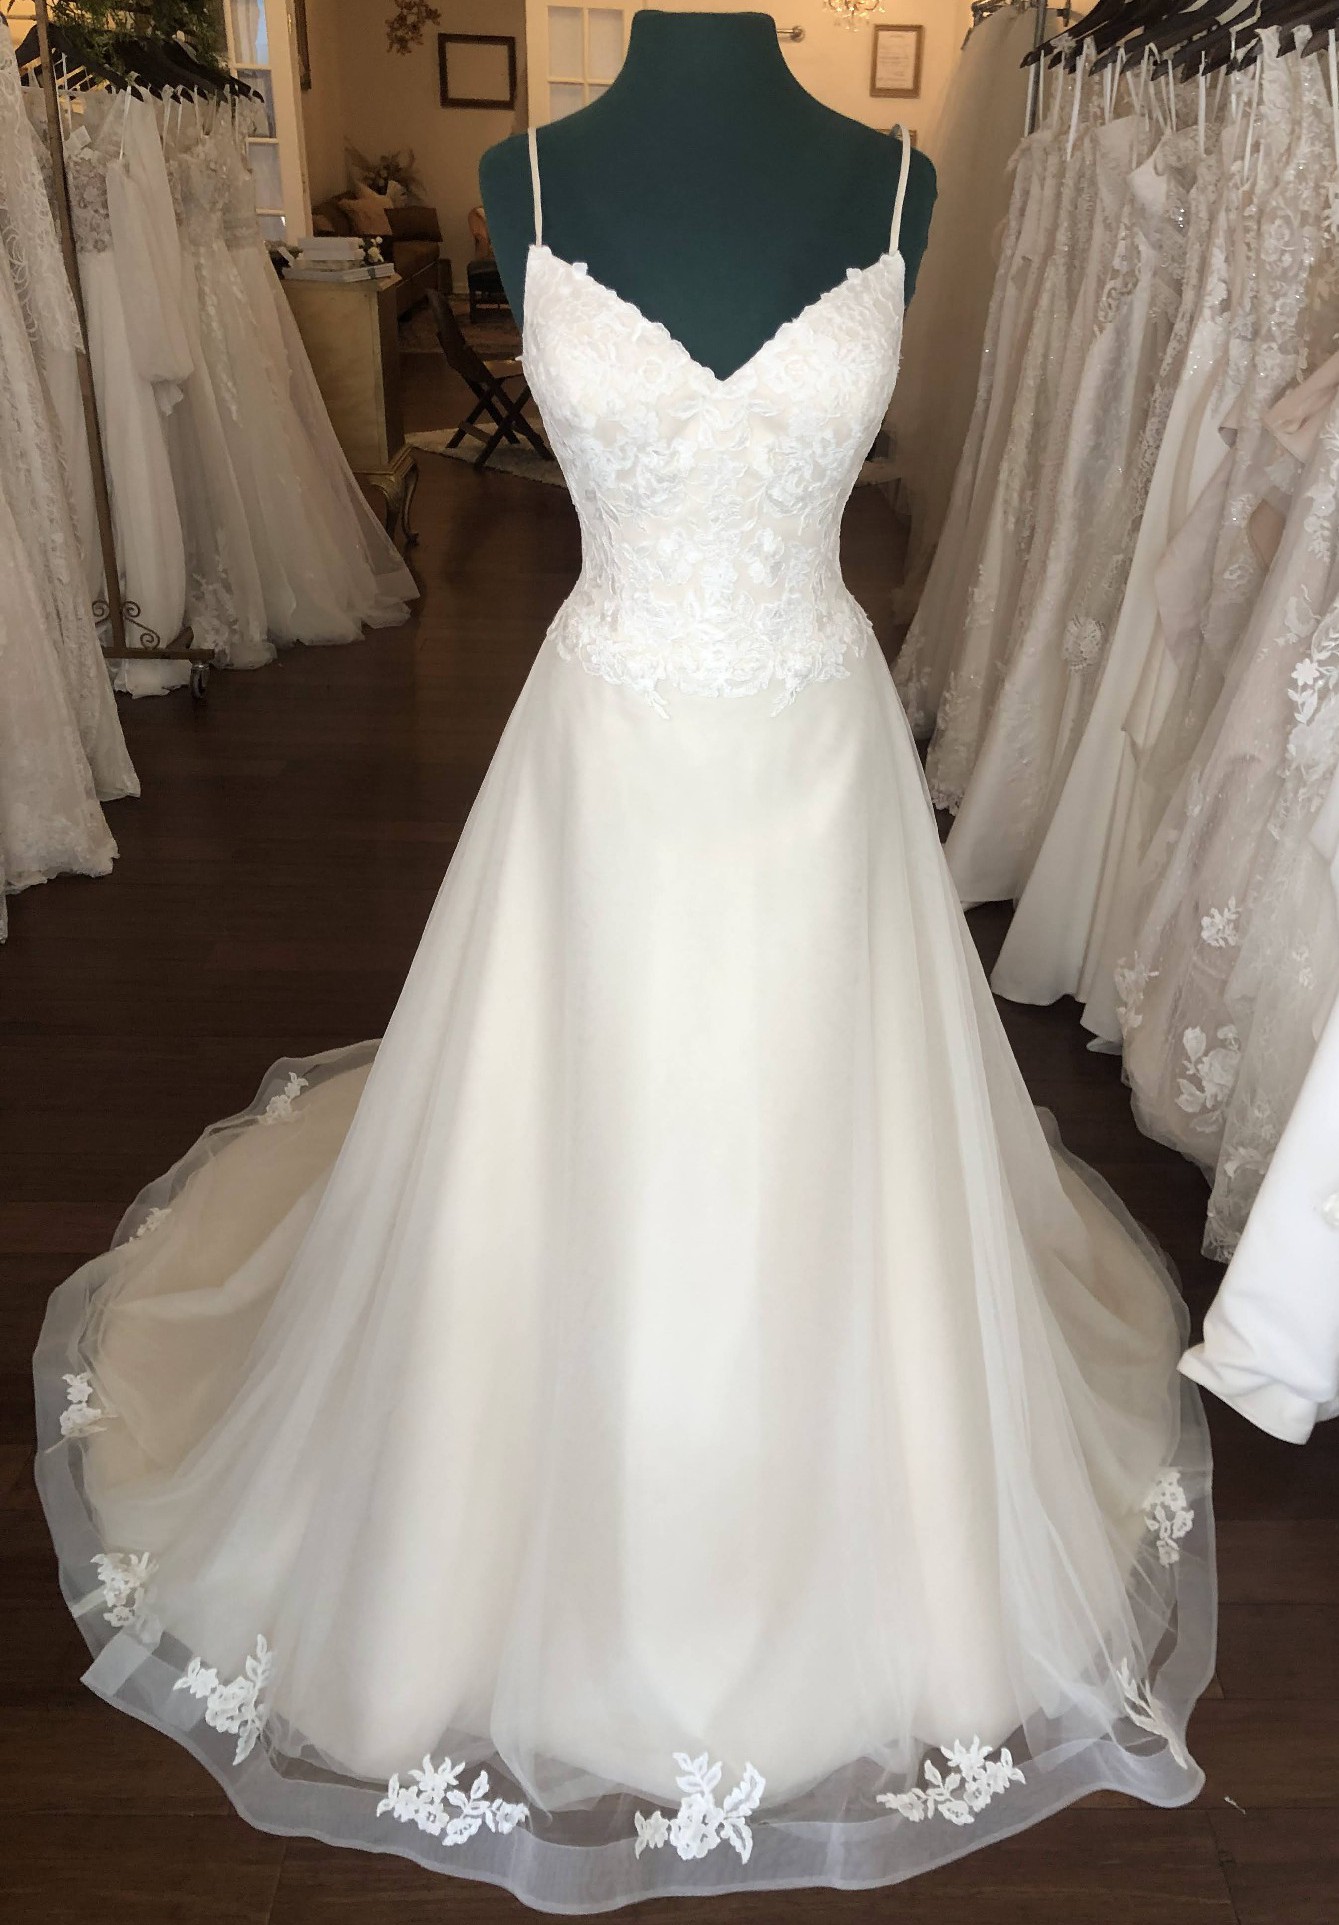 Sweetheart Gowns 1115 Sample Wedding Dress Save 45% - Stillwhite